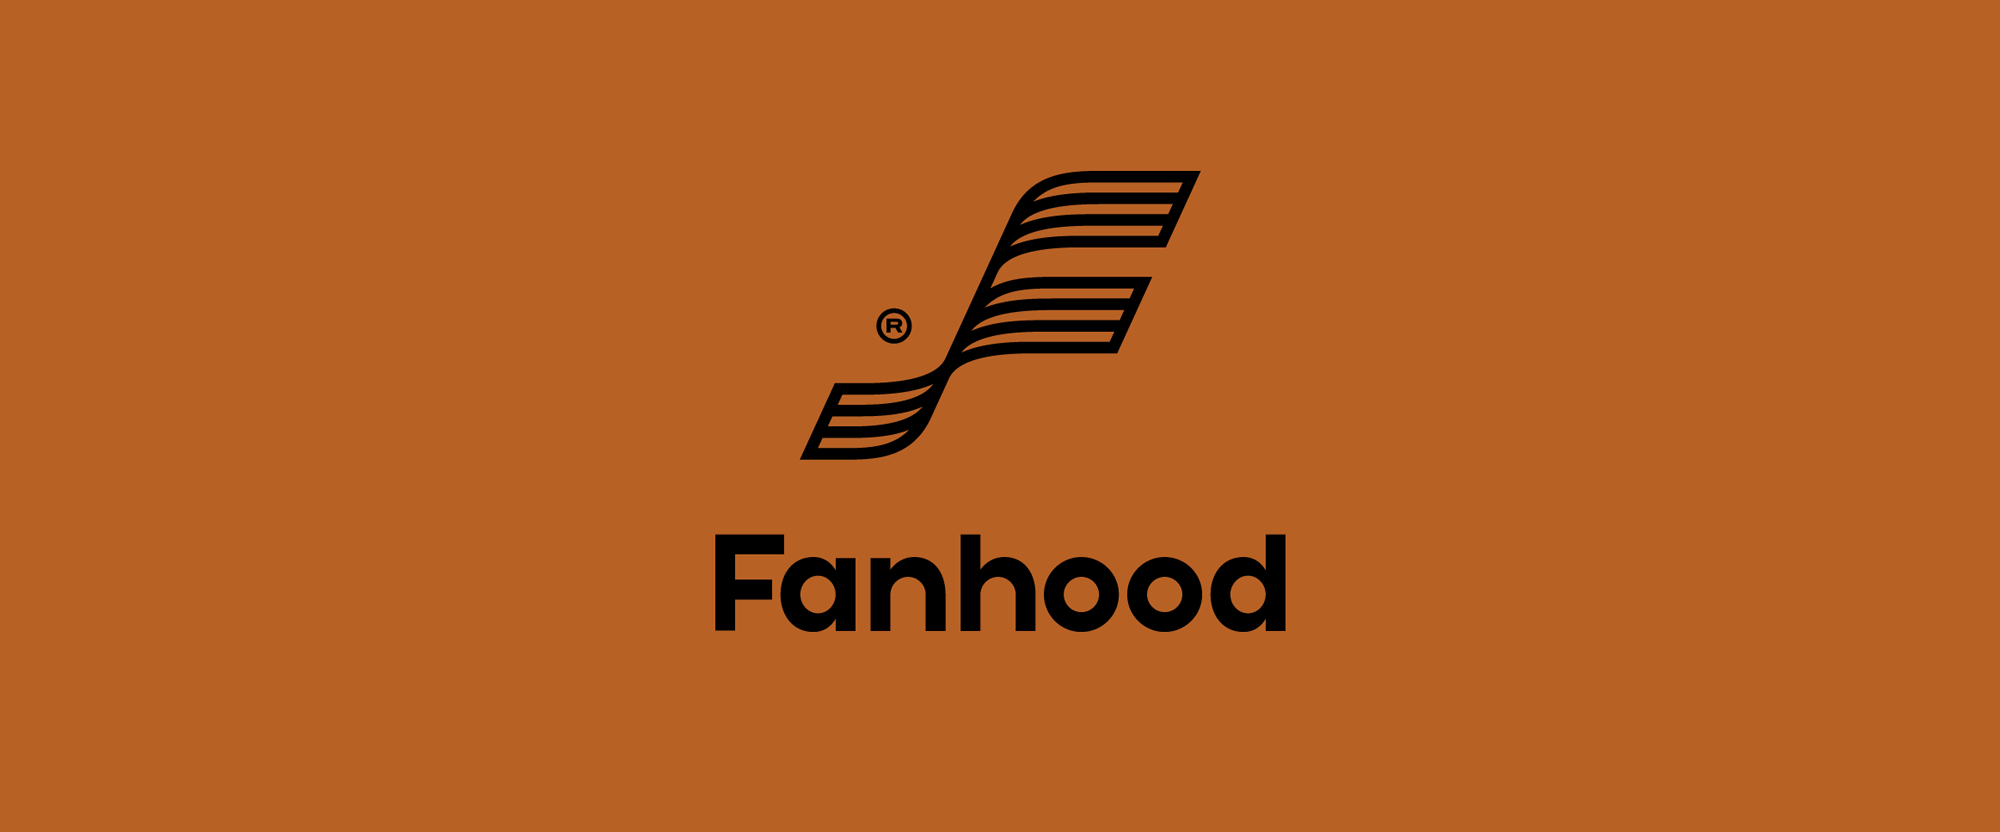 New Logo and Identity for Fanhood by Hoodzpah